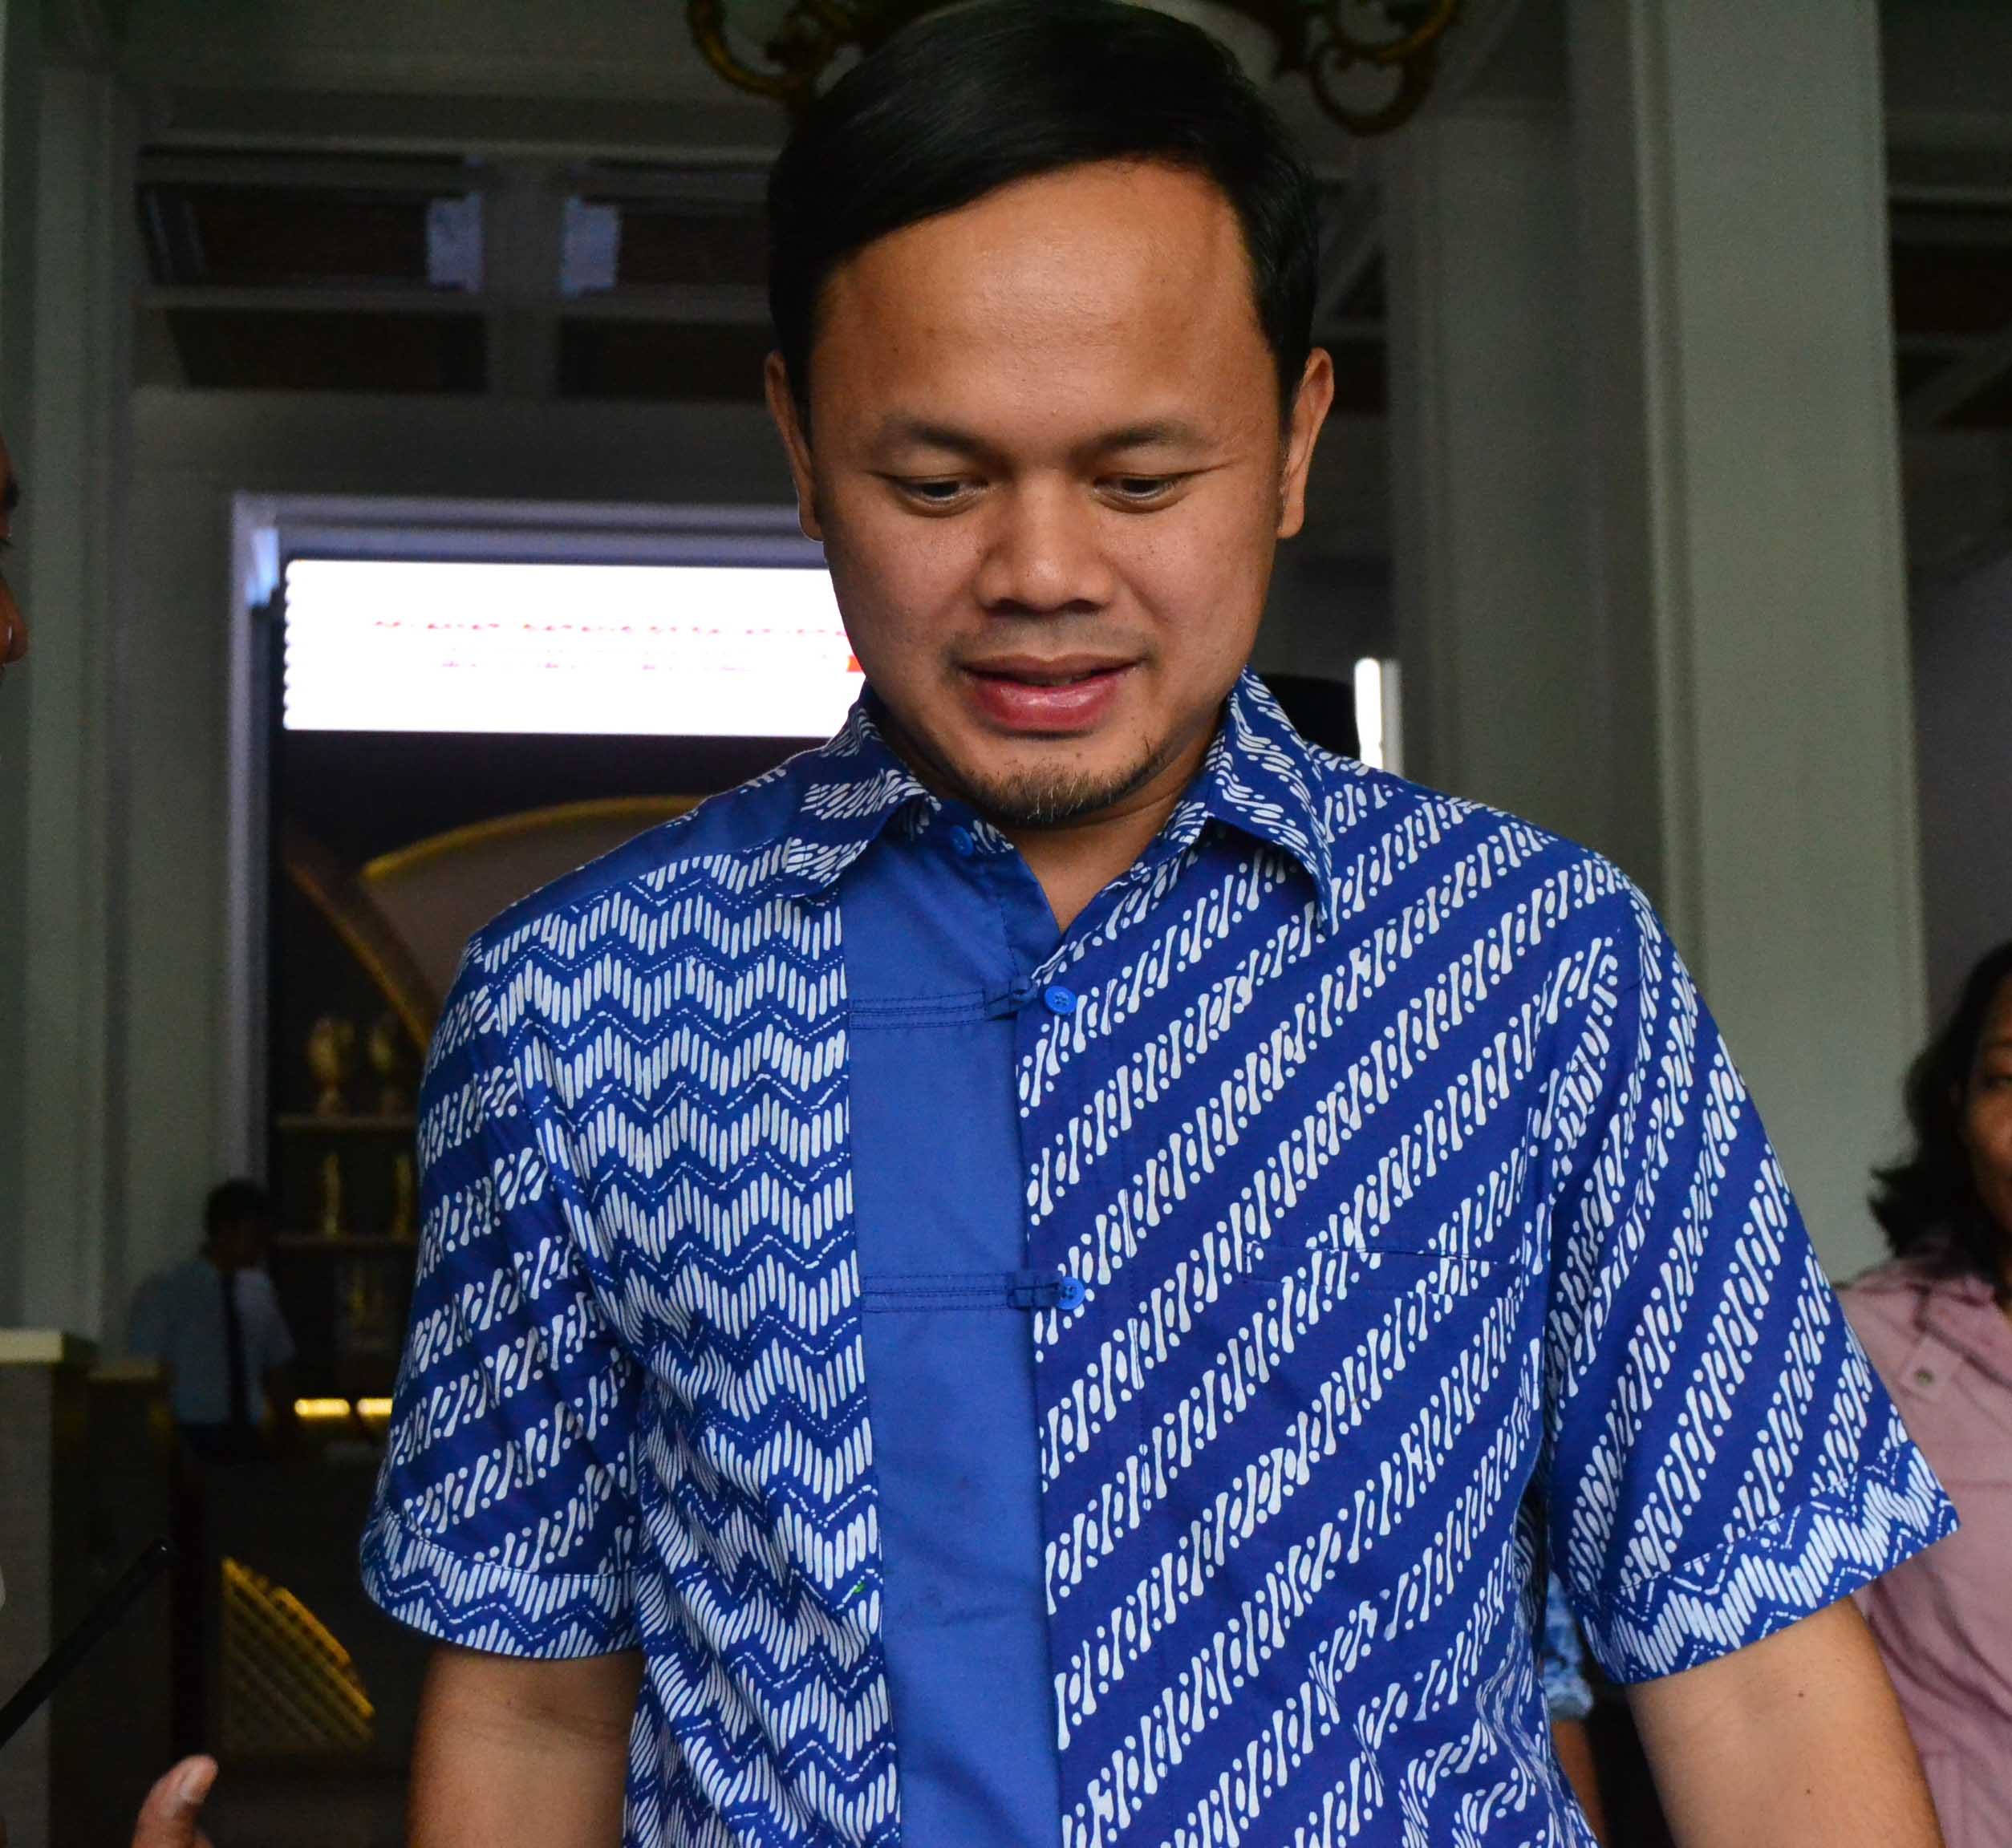 Wali Kota Bogor Bima Arya tak khawatir hasil survei yang sebut kotanya paling intoleran. Foto oleh Dyah Ayu Pitaloka/Rappler  